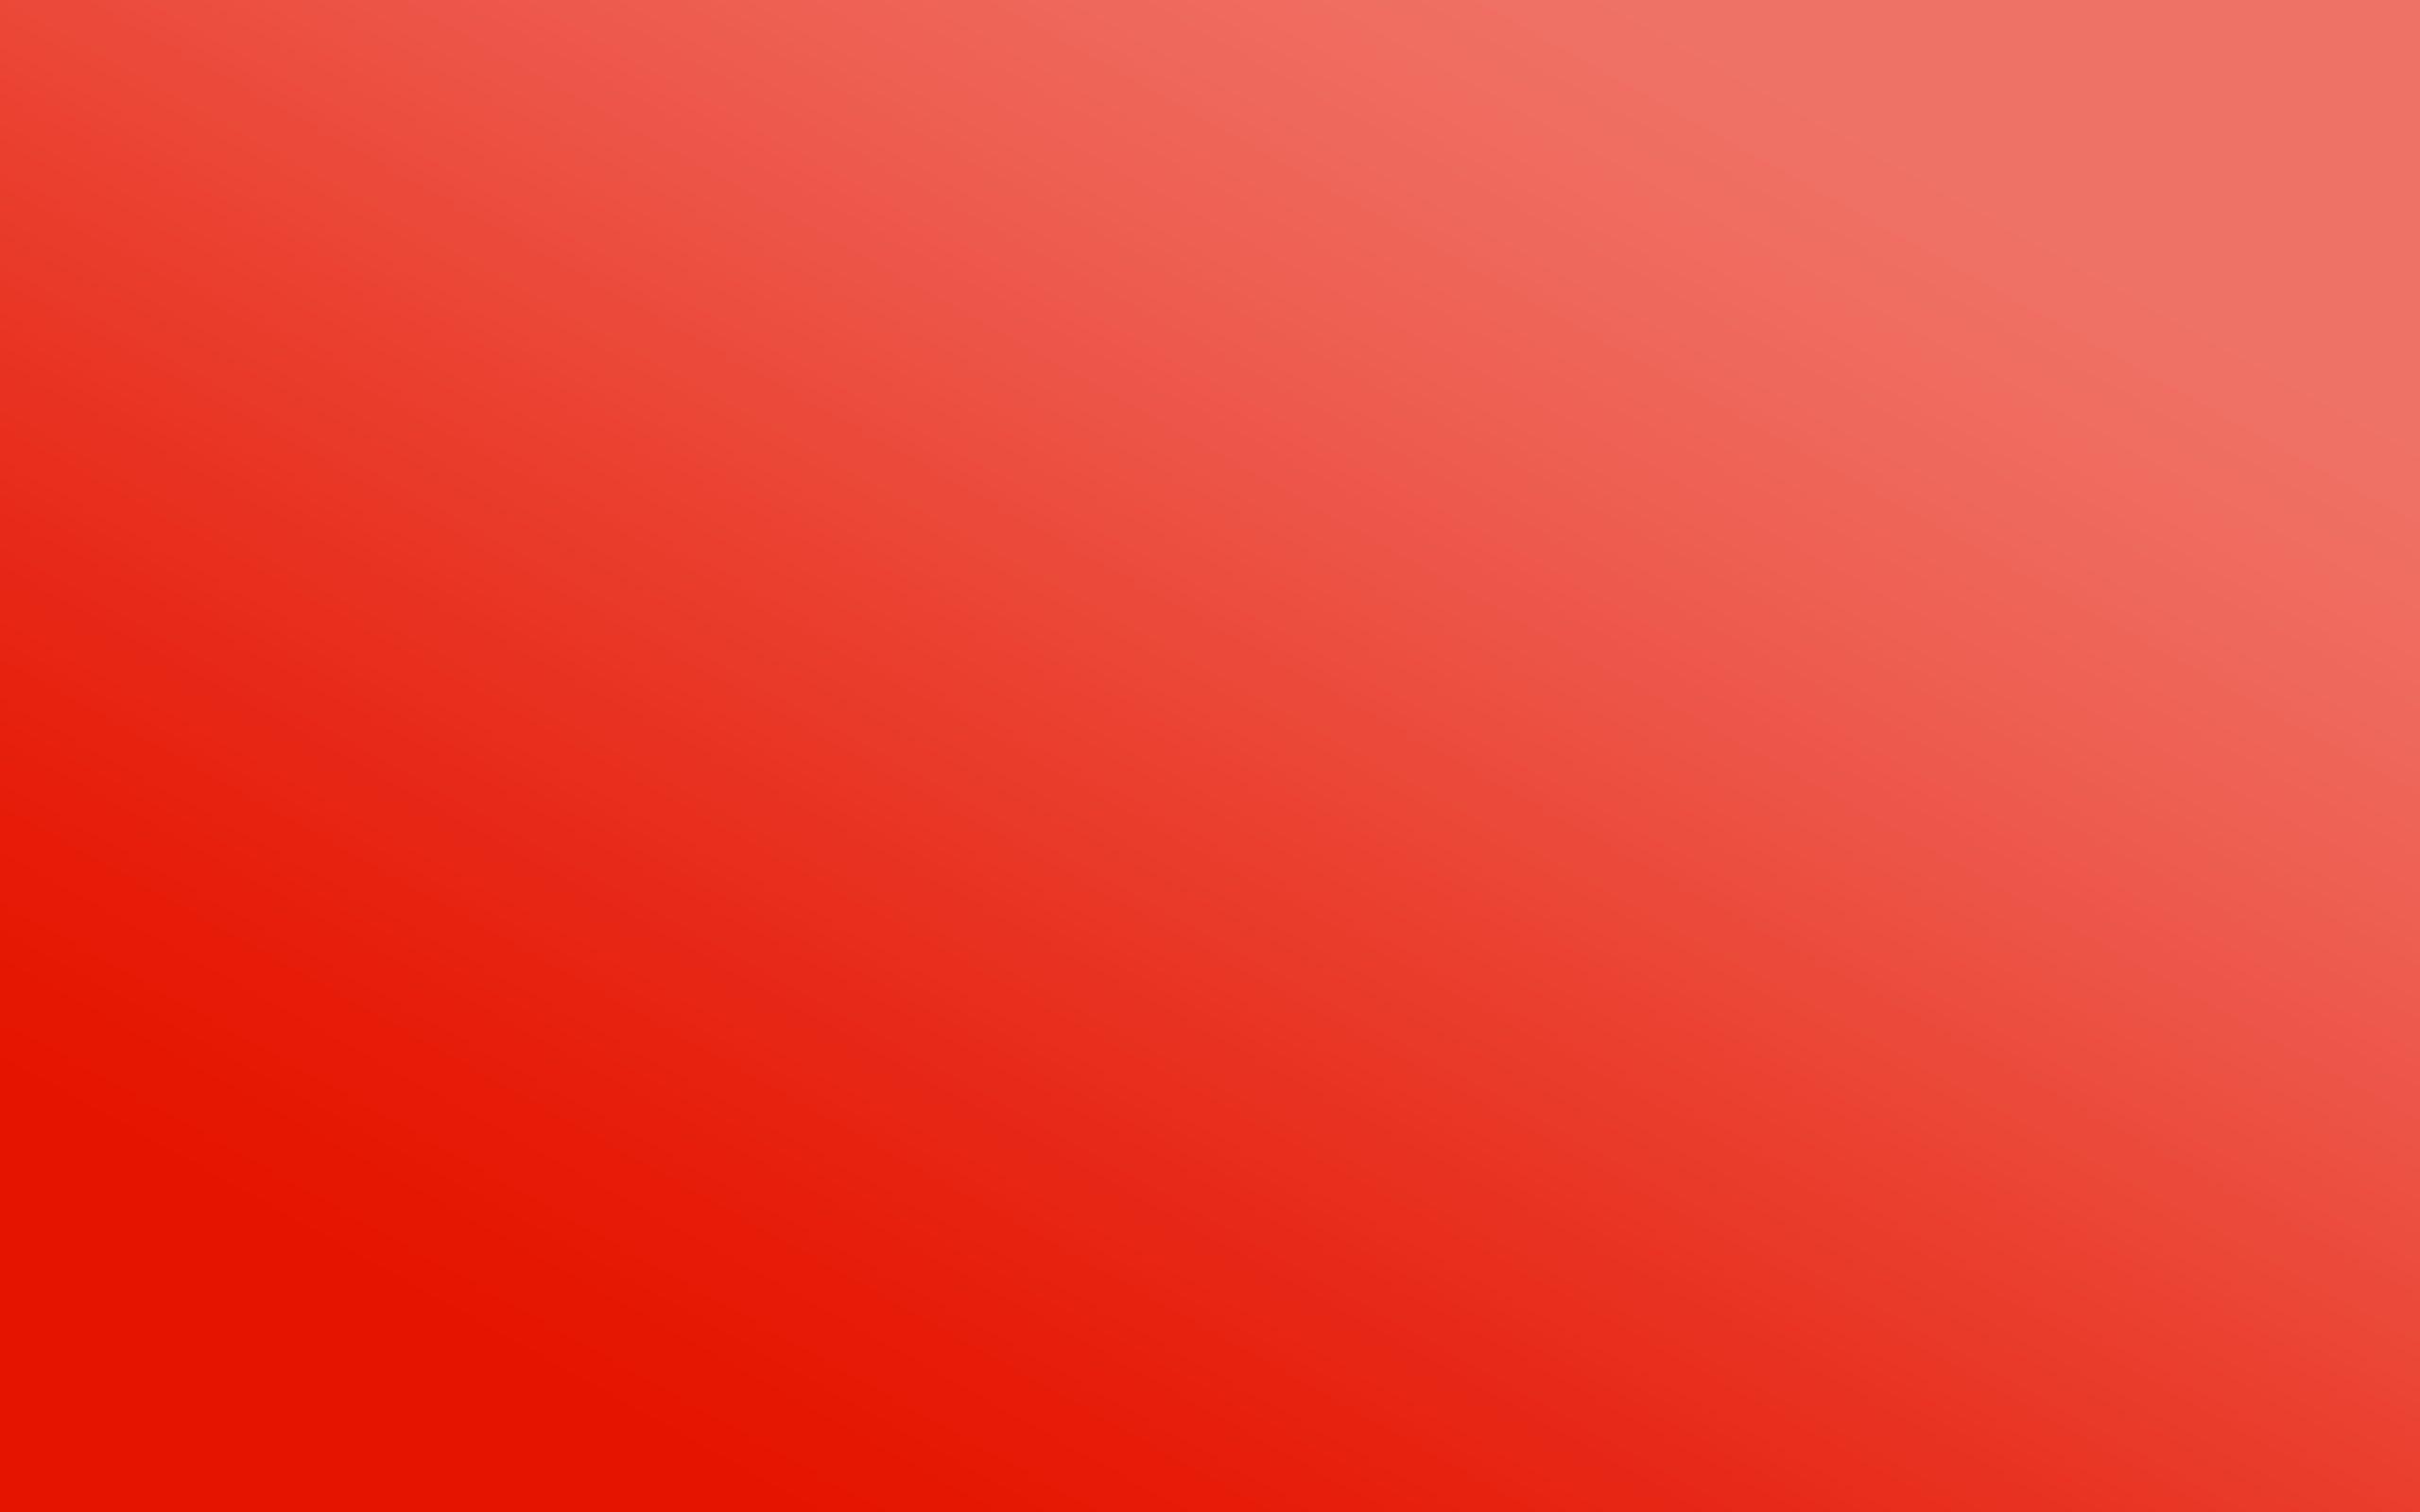 Plain Light Red Wallpaper 46972 2560x1600 px